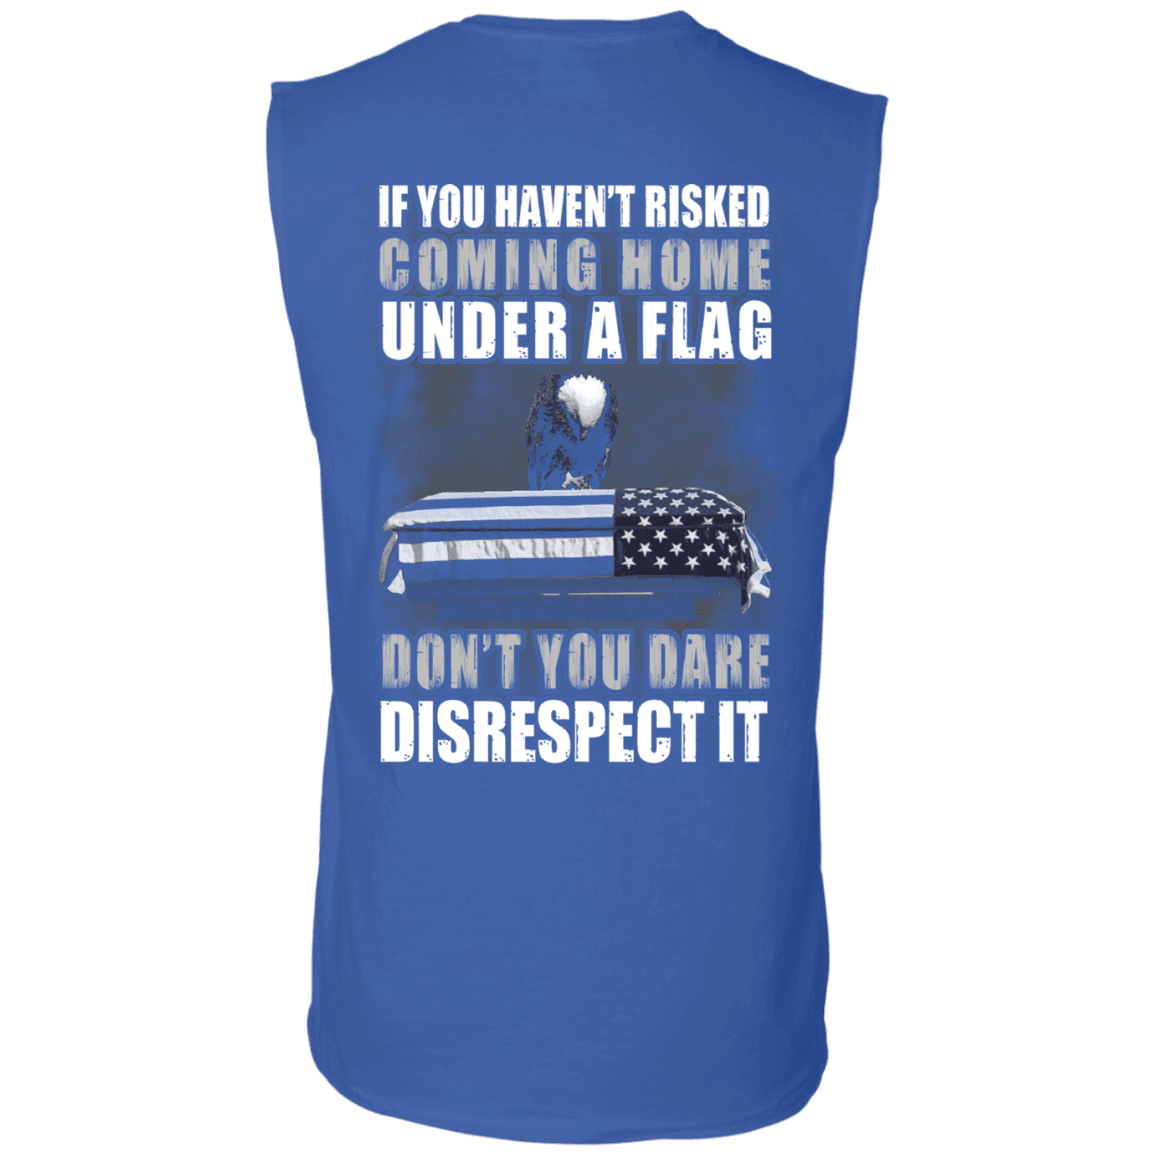 Military T-Shirt "Under A Flag Disrespect It" Men Back-TShirt-General-Veterans Nation